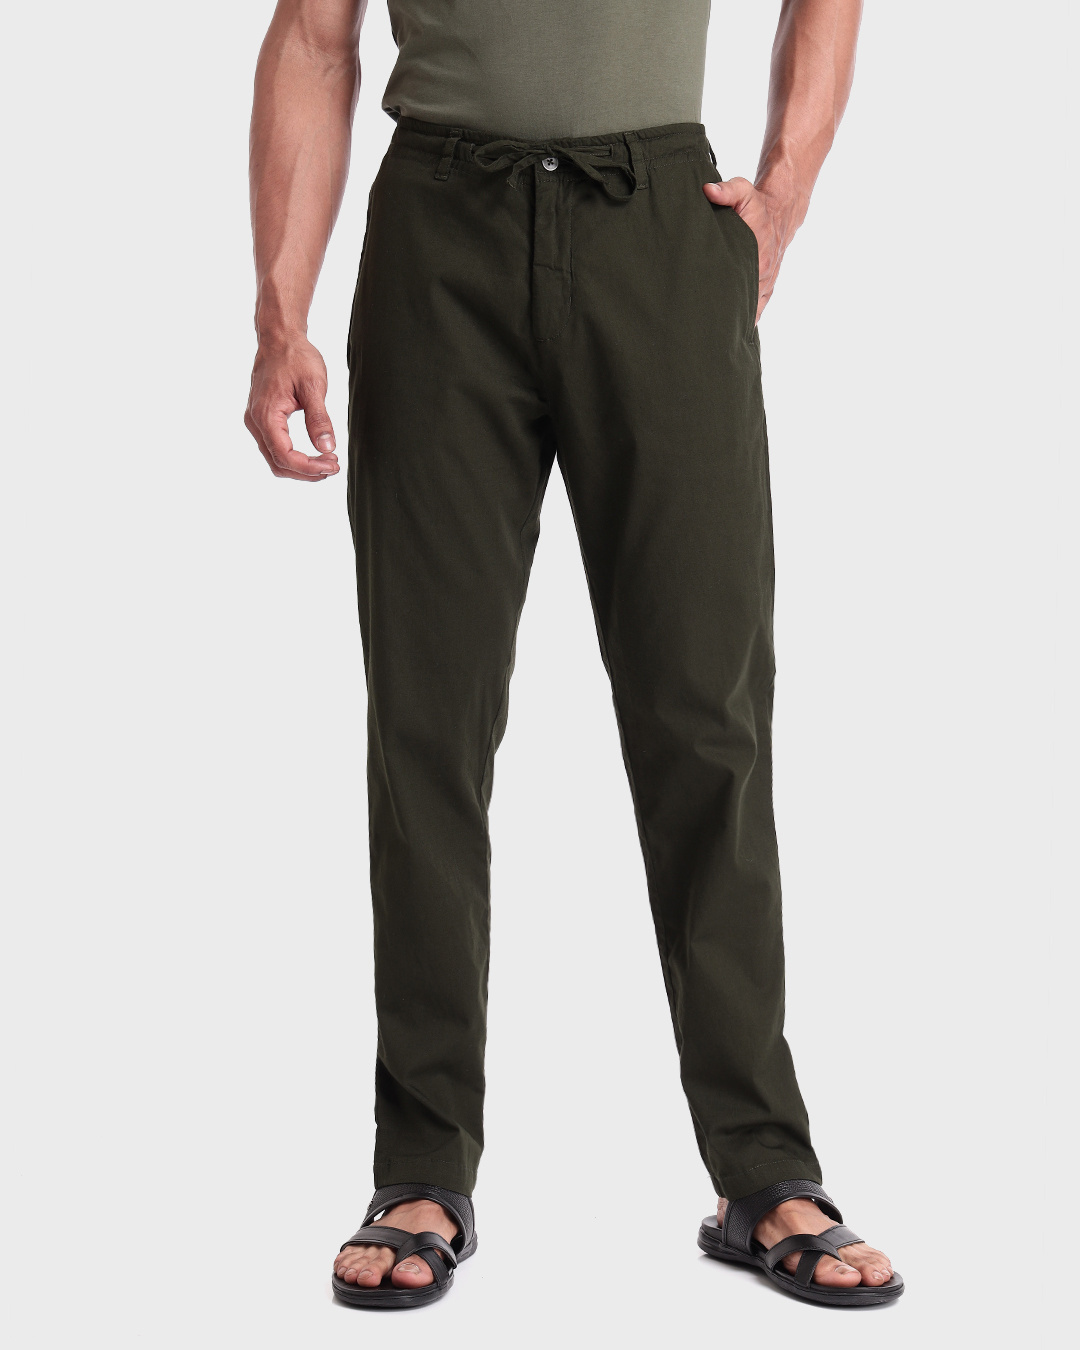 Buy Men's Dark Olive Trousers Online at Bewakoof